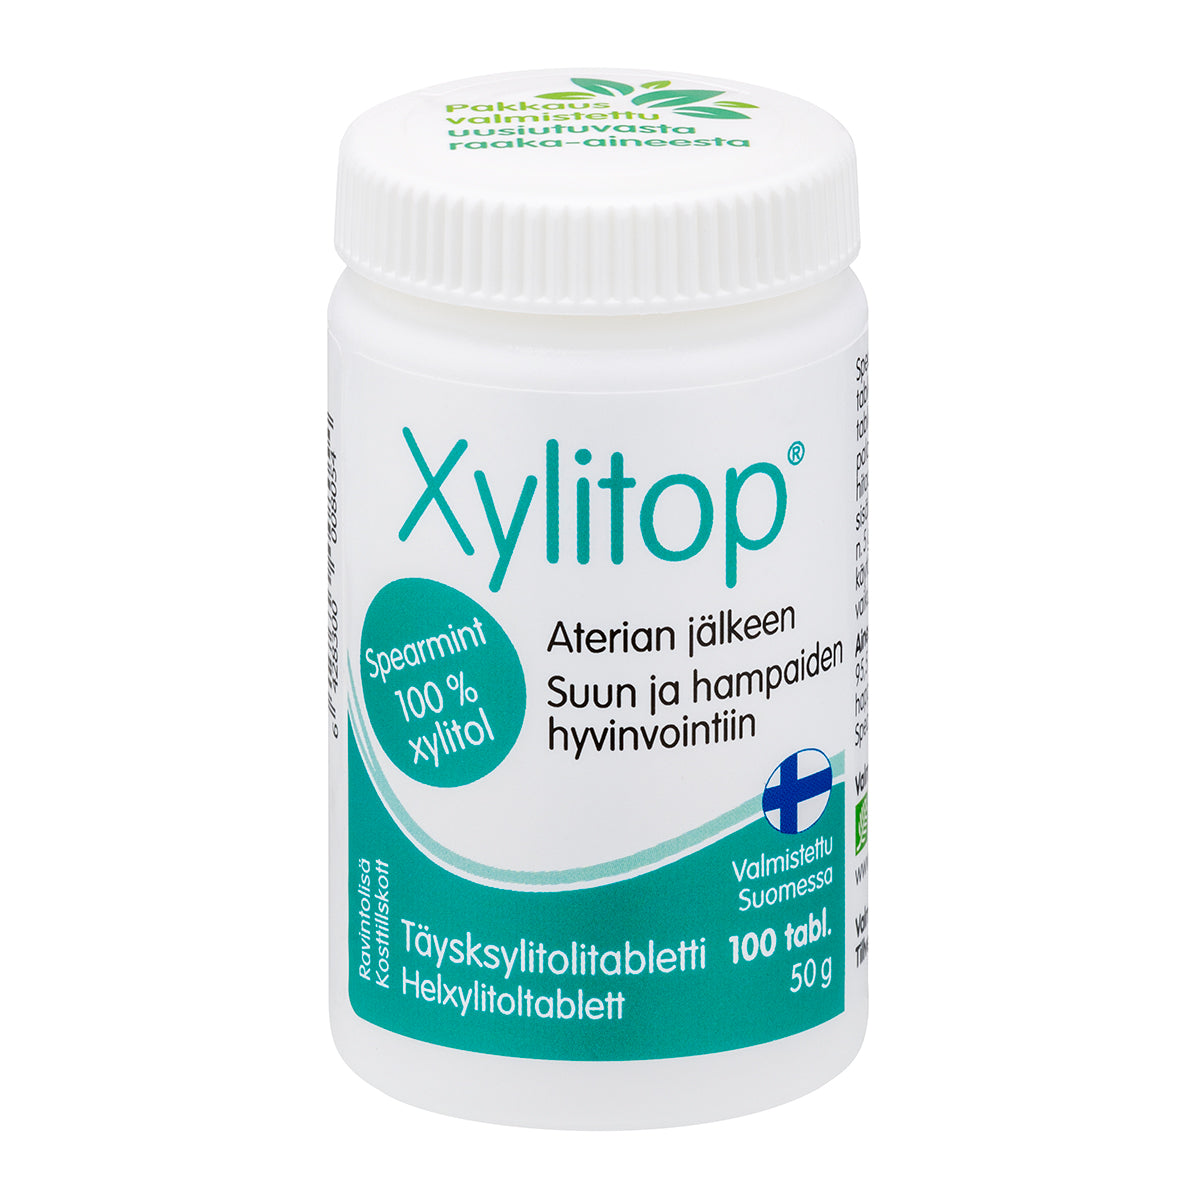 Xylitop Spearmint - Täysksylitolipastilli 100 tabl.